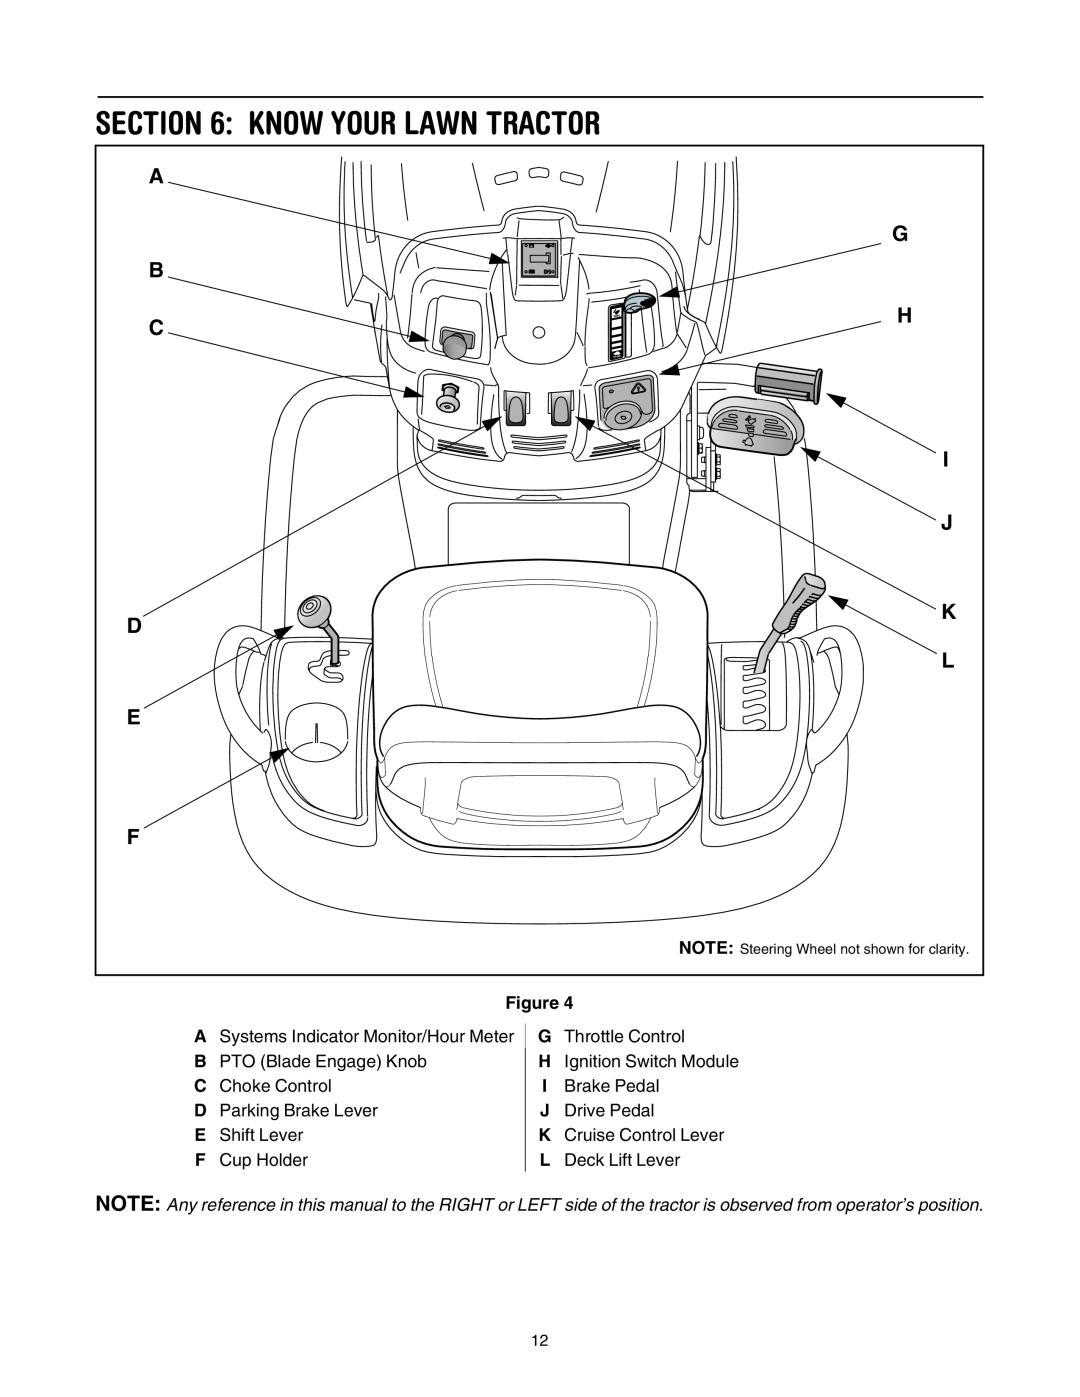 Toro LX500 manual Know Your Lawn Tractor, D E F, I J K L 